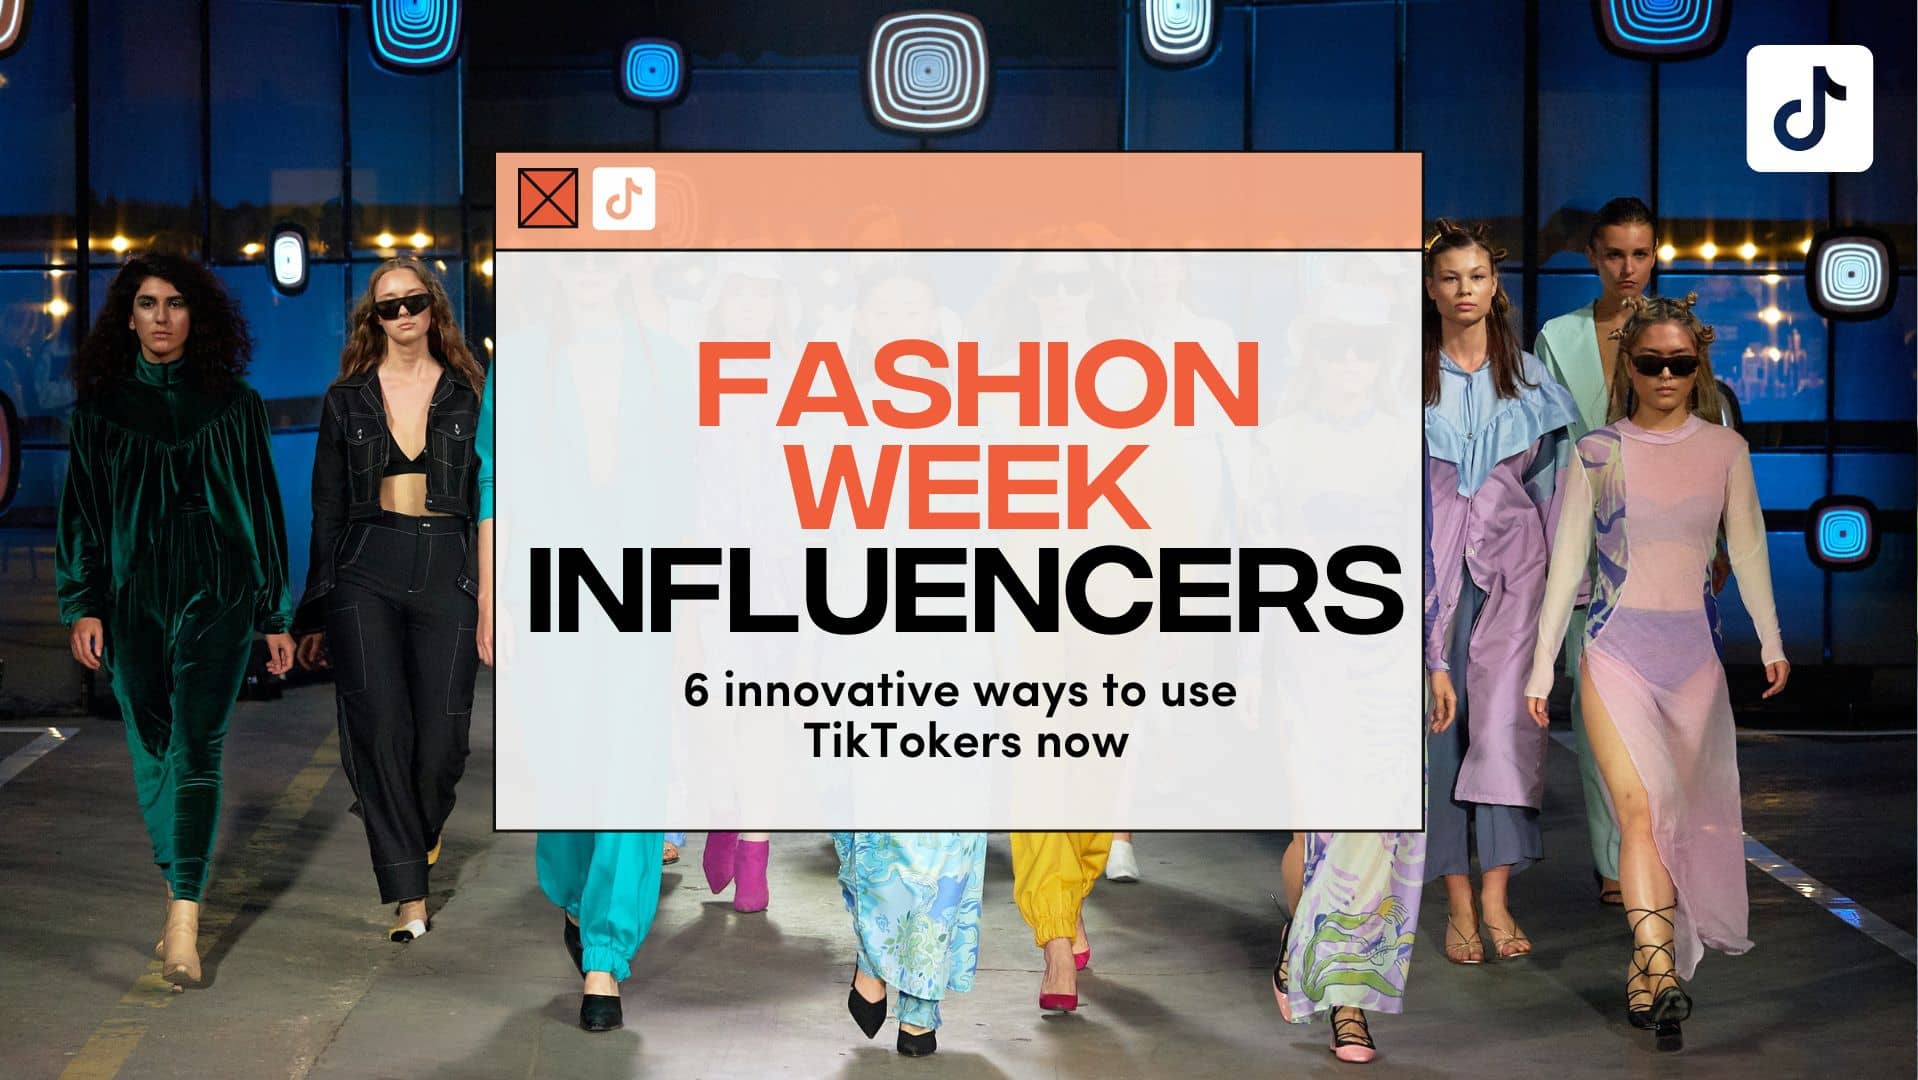 Instagram Influencers Are the New Fashion Establishment